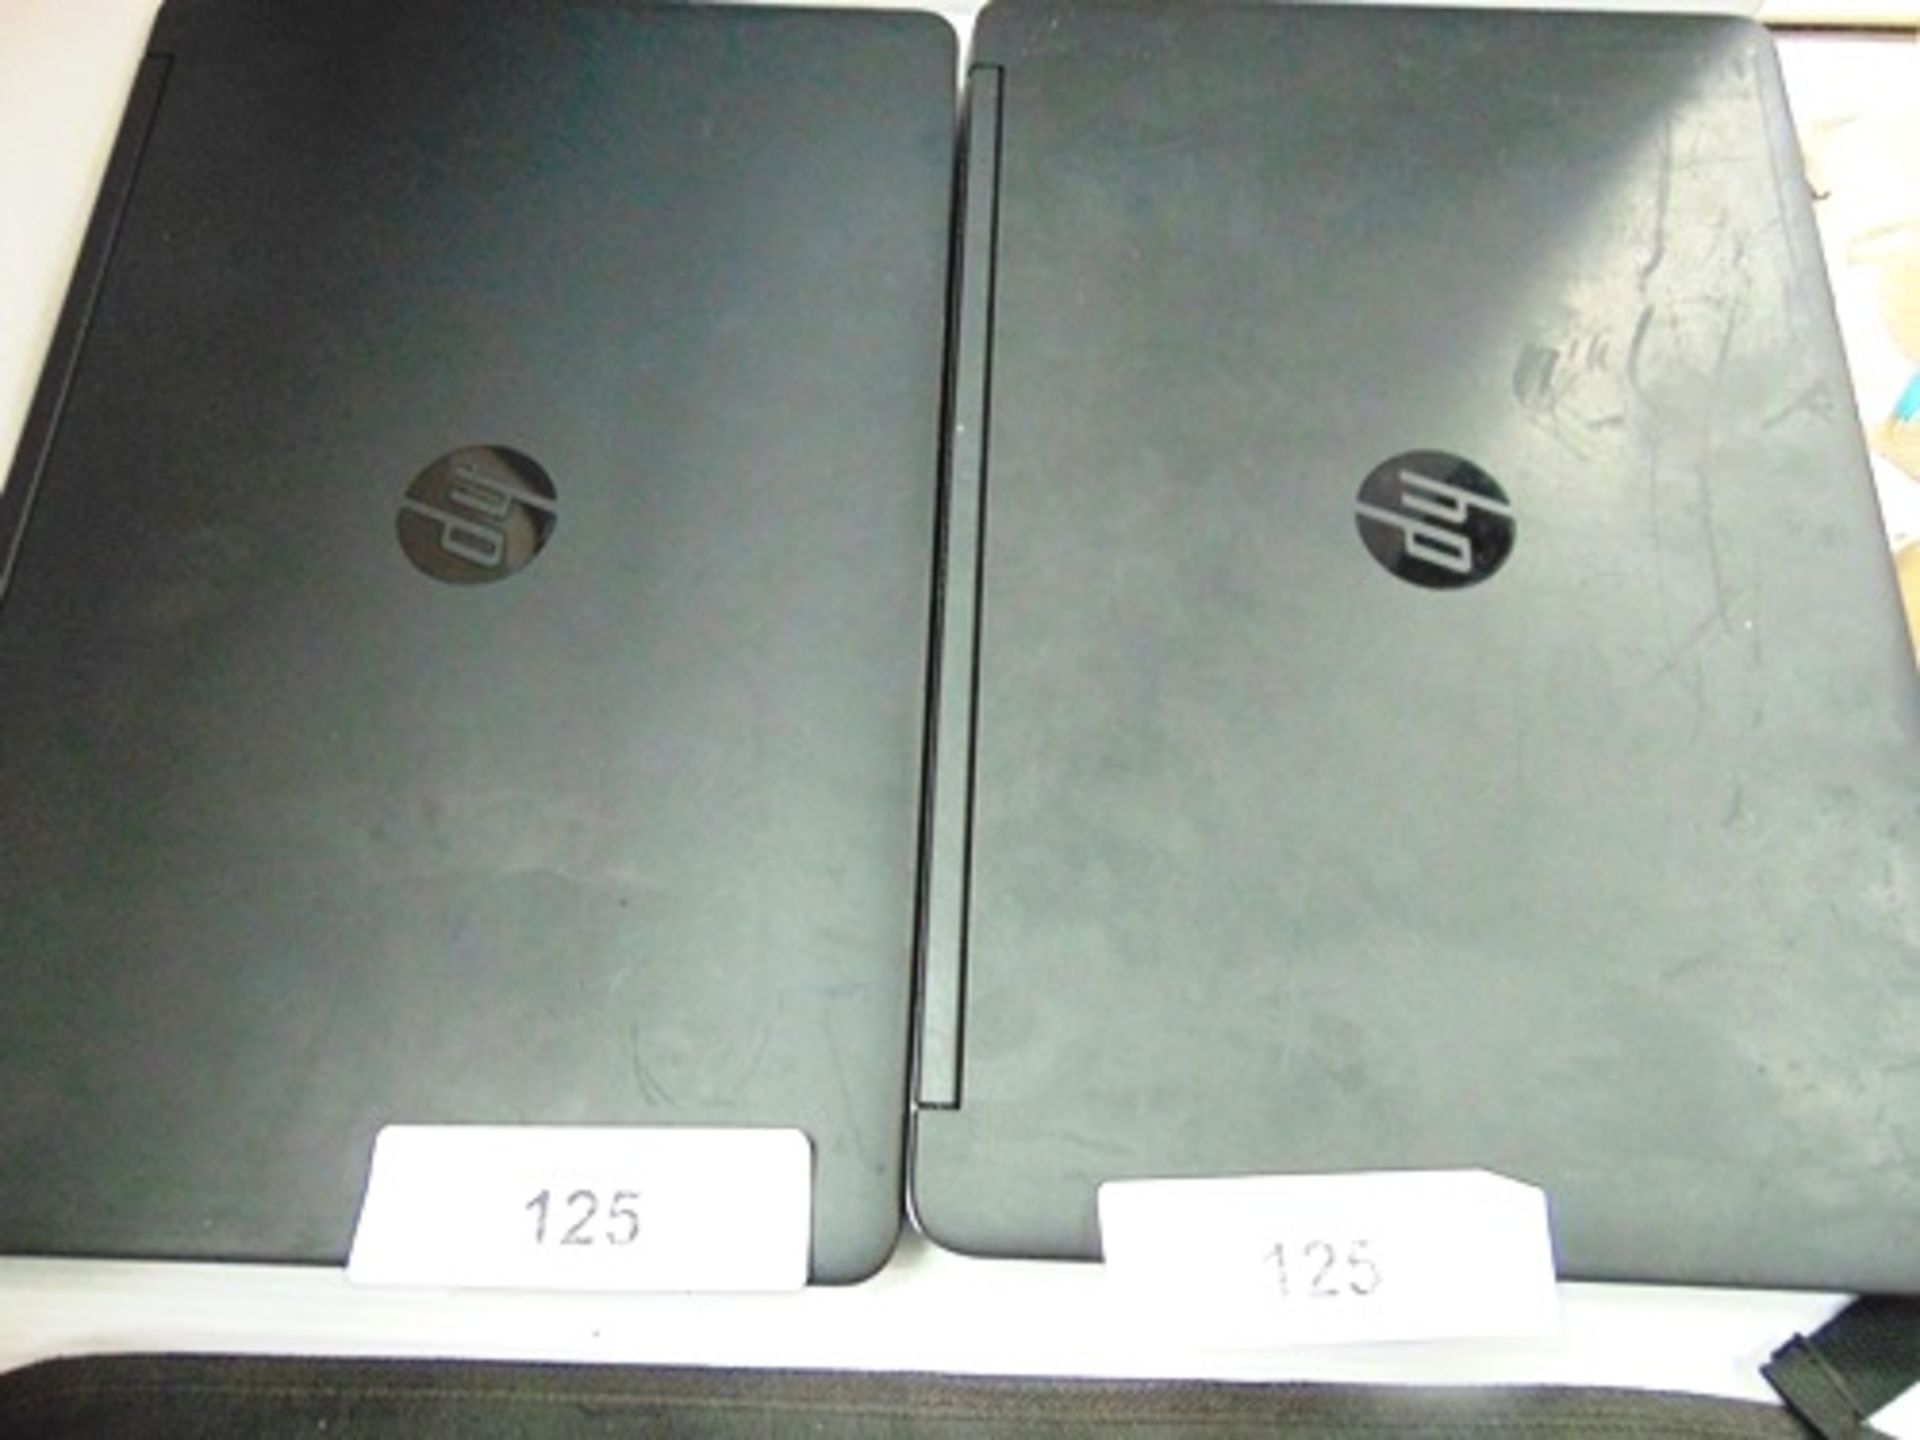 2 x HP ProBook 650 G1 laptops, 1 x product no. F1P85ET#ABU and 1 x product no. H5G75ET#ABU, hard